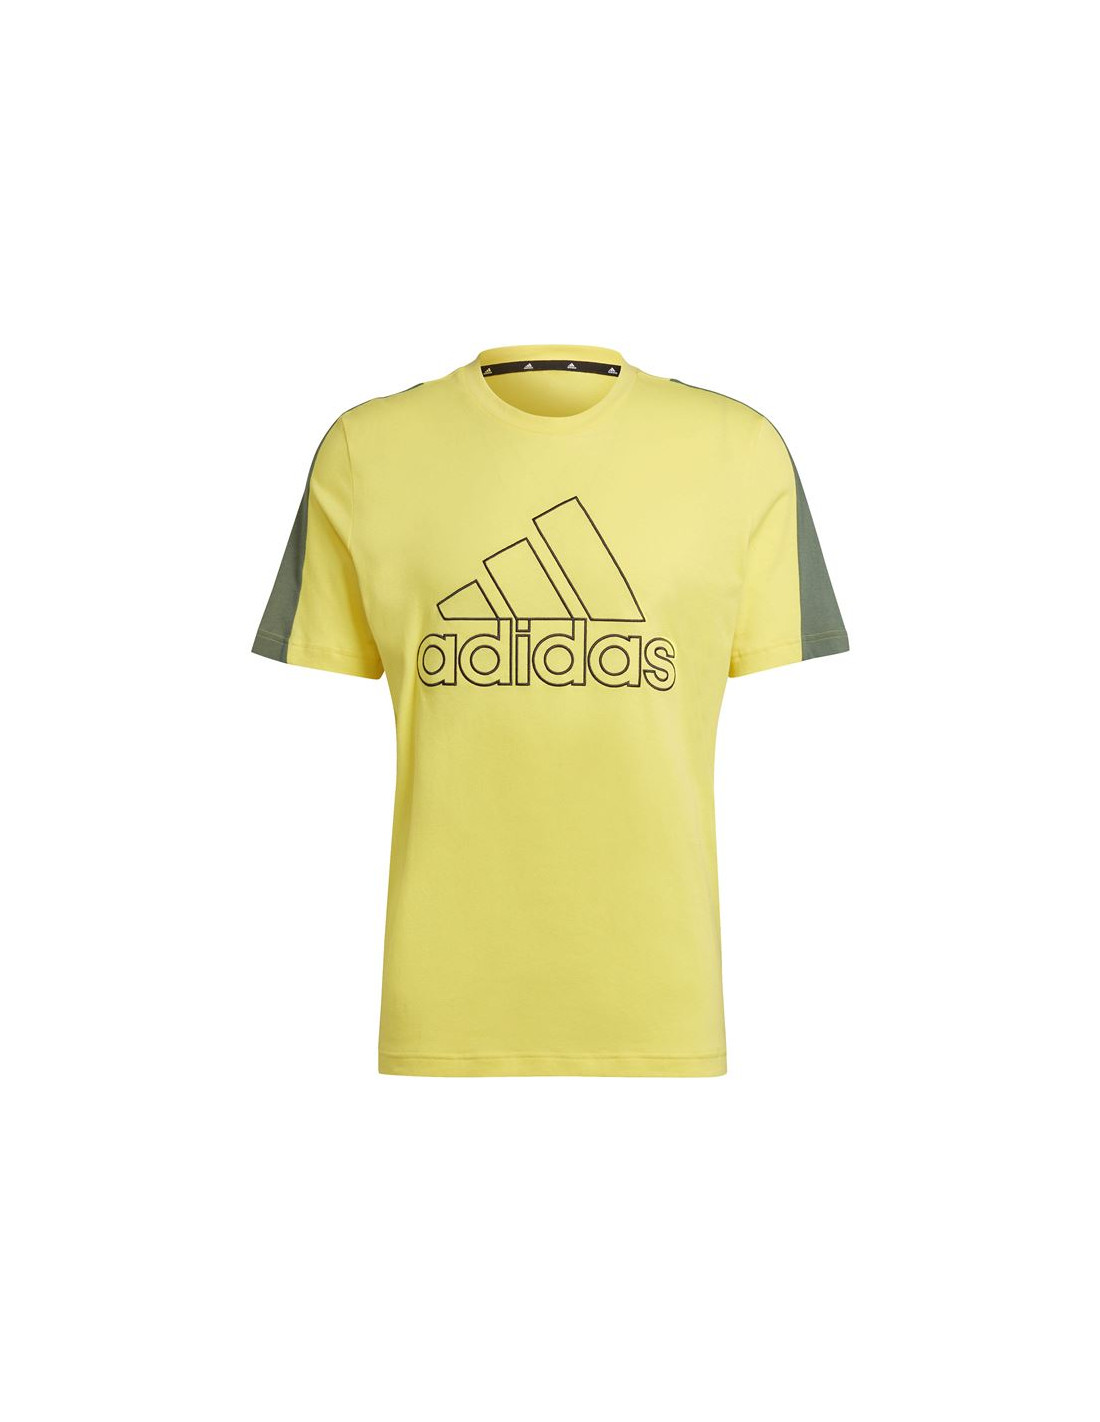 Camiseta adidas embroidered future icons hombre yellow